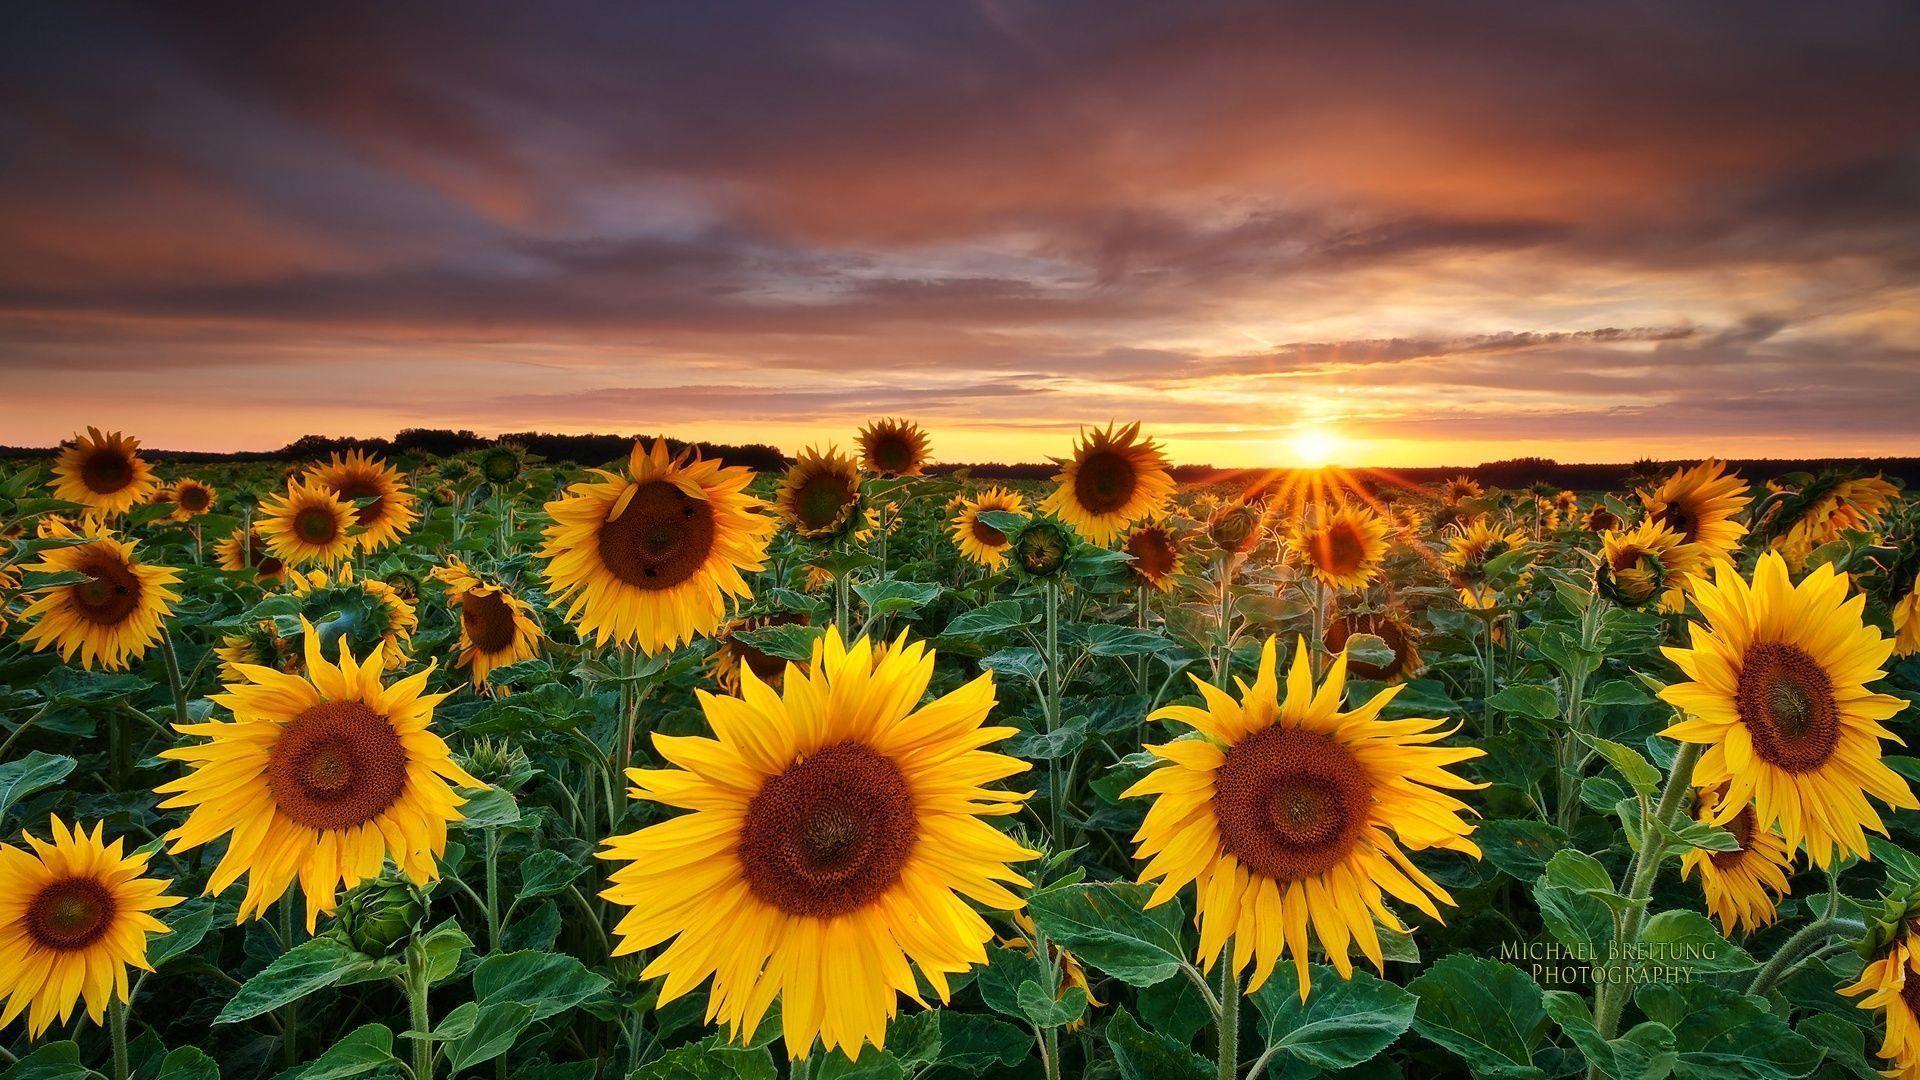 Cool Sunflowers 21 HD Image Wallpaper. HD Image Wallpaper